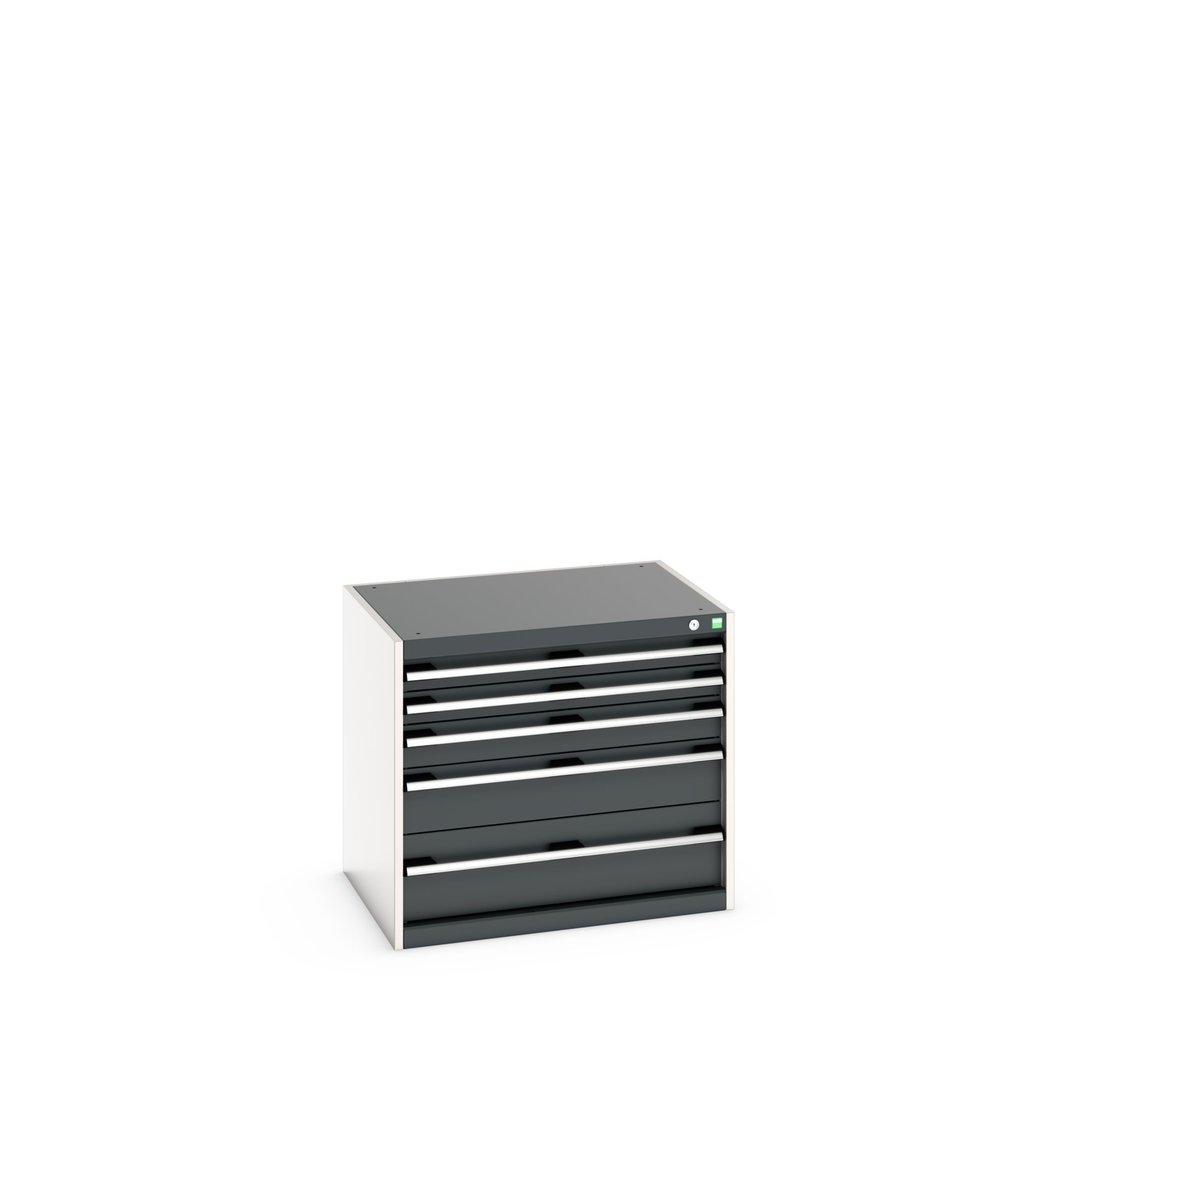 40020017. - cubio drawer cabinet